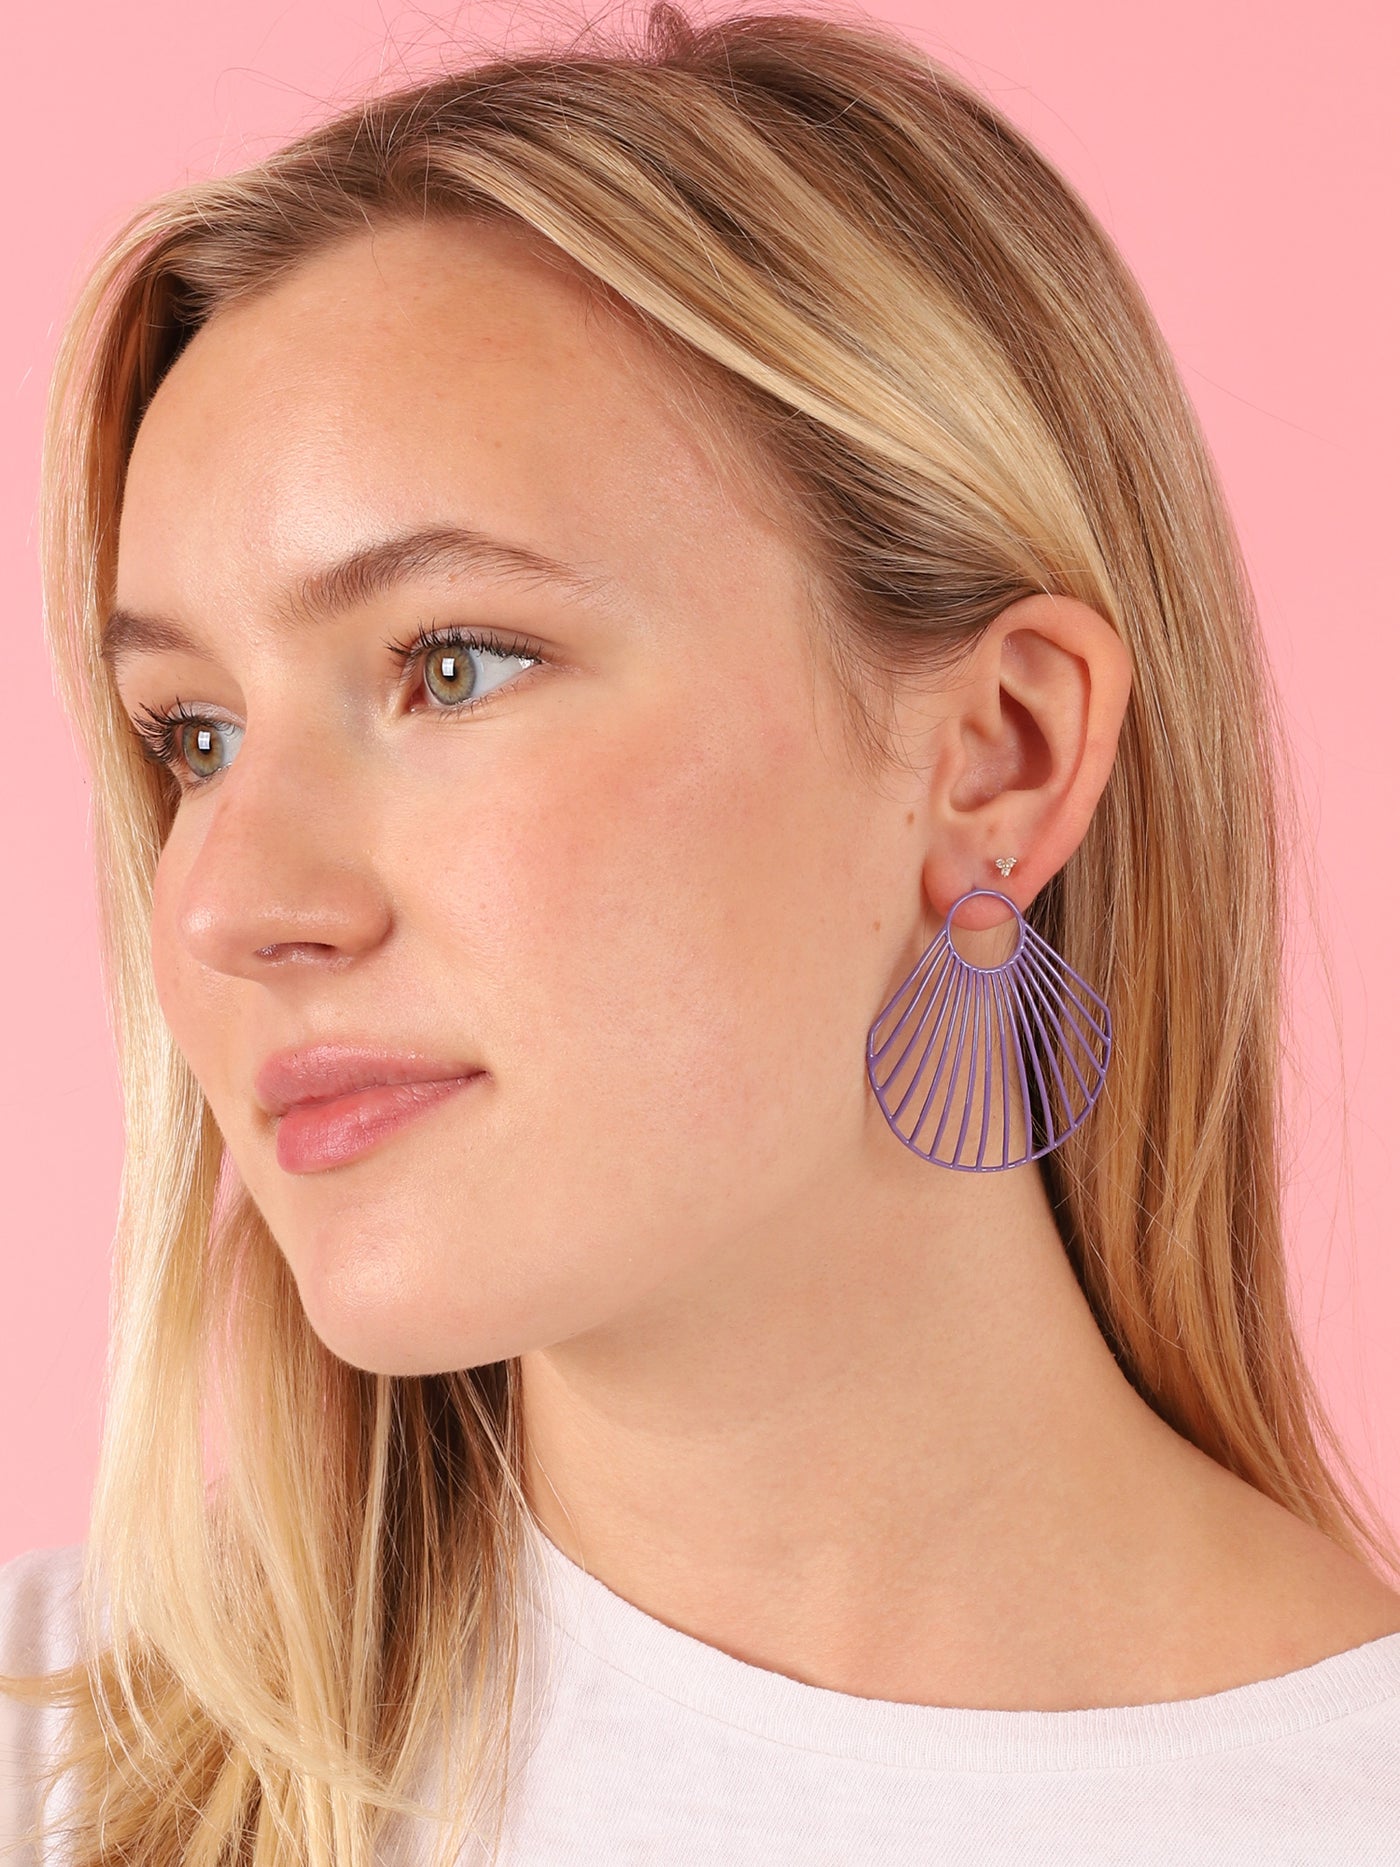 Purple Large Clam Shell Earrings